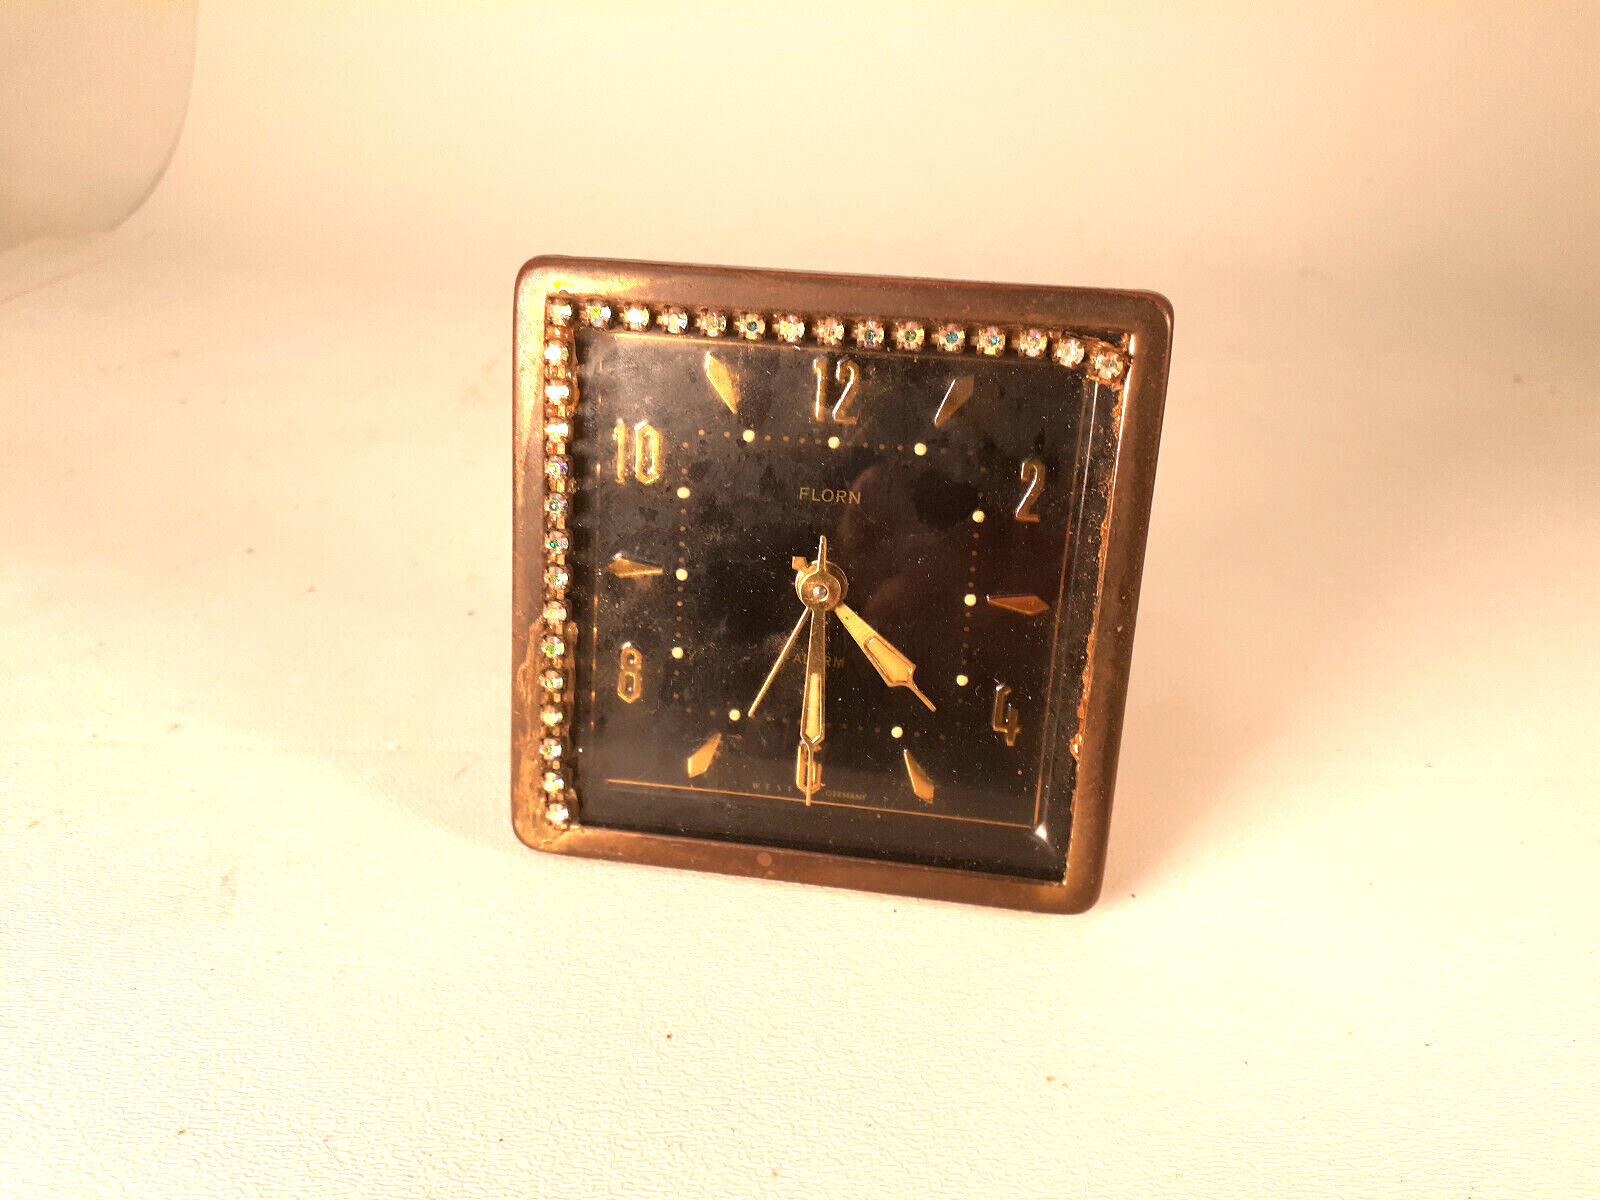 Vintage German Glamor Alarm Clock, Rhinestone Case,1950s, Running